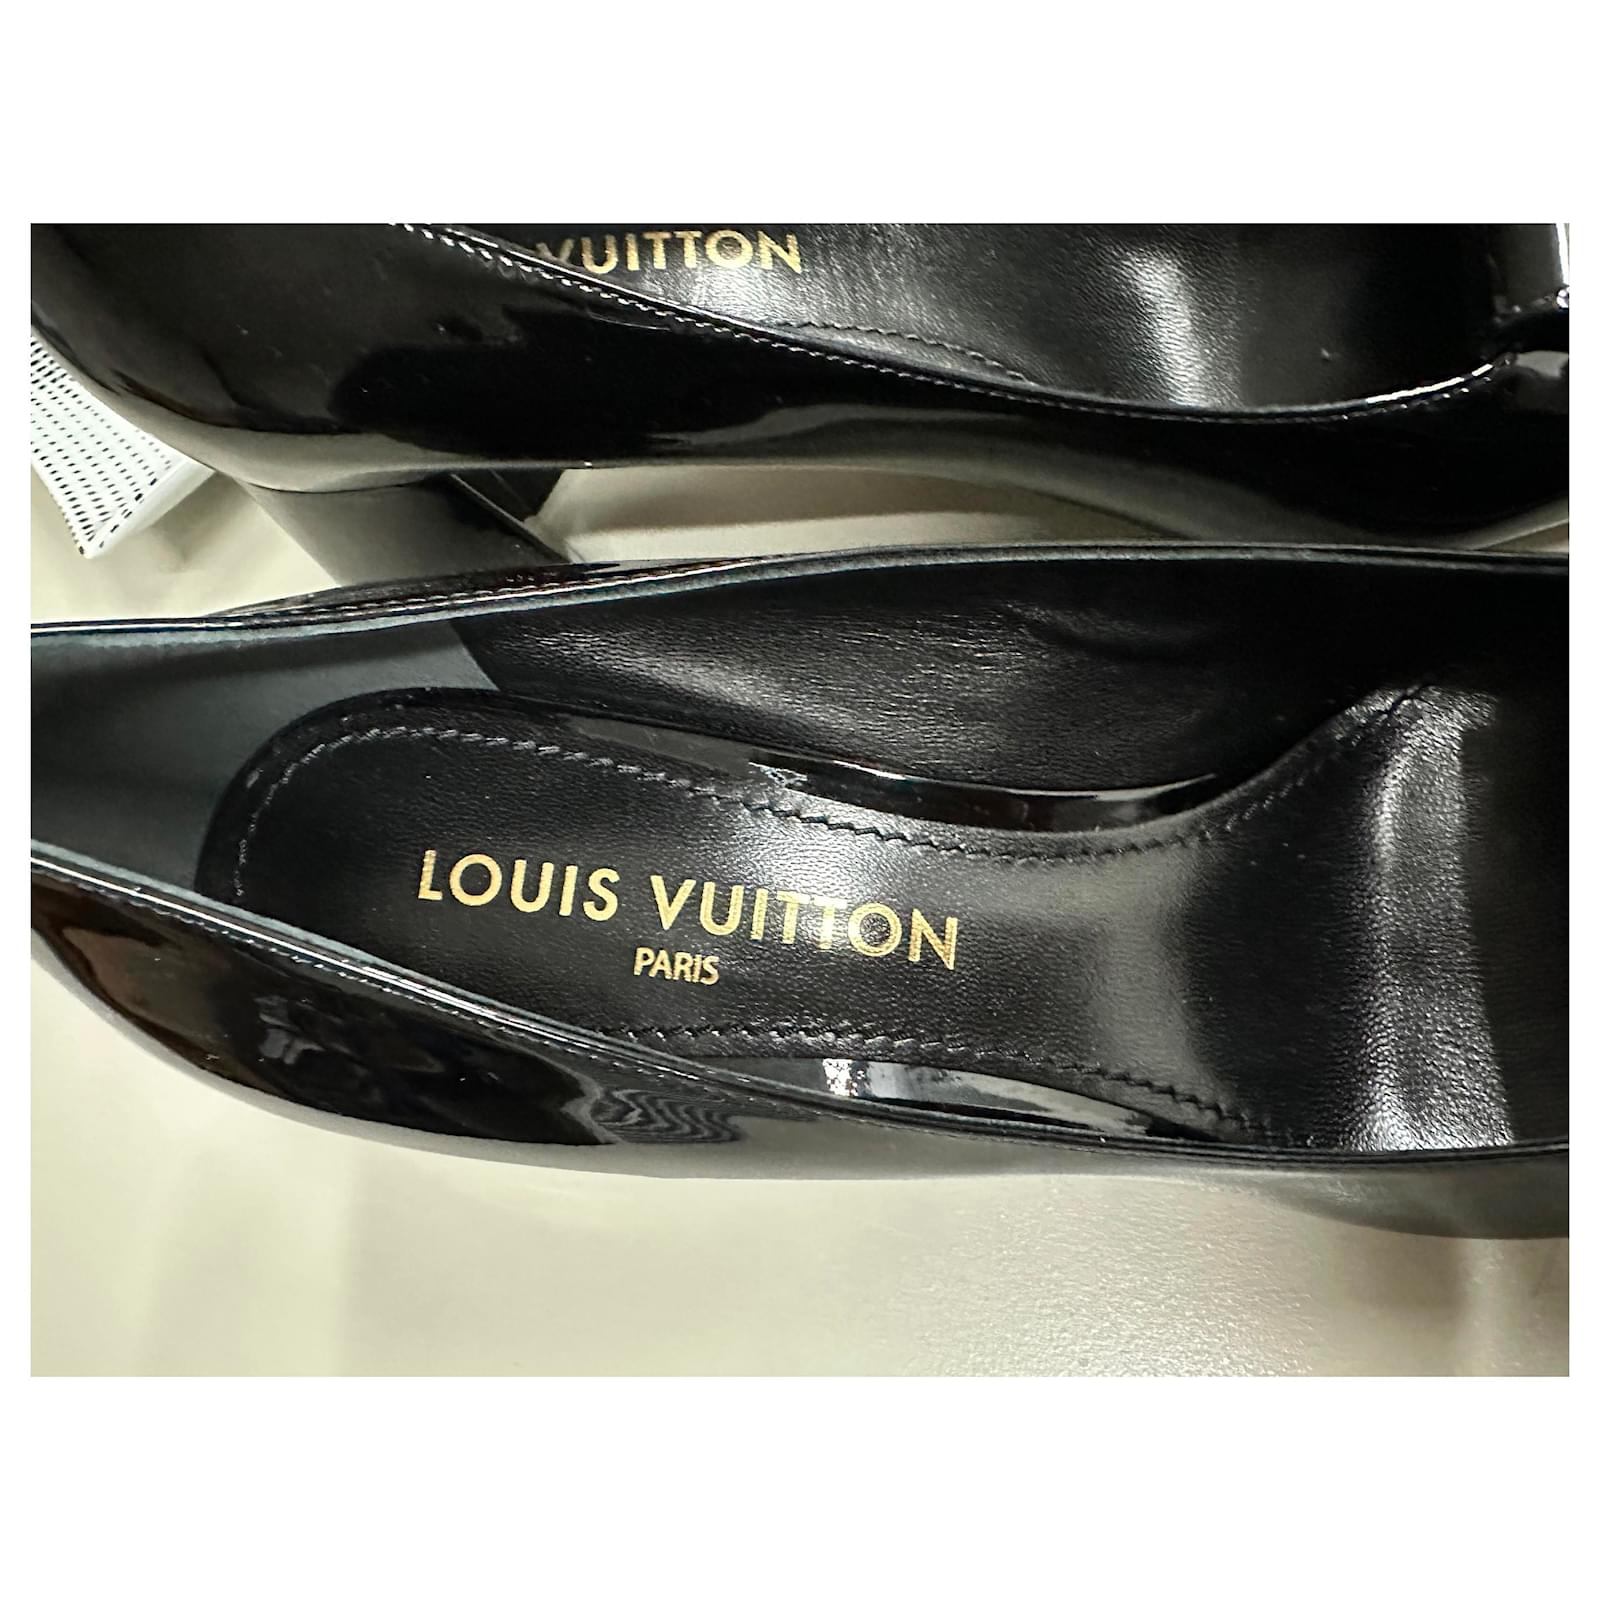 Streamline patent leather heels Louis Vuitton Black size 38 EU in